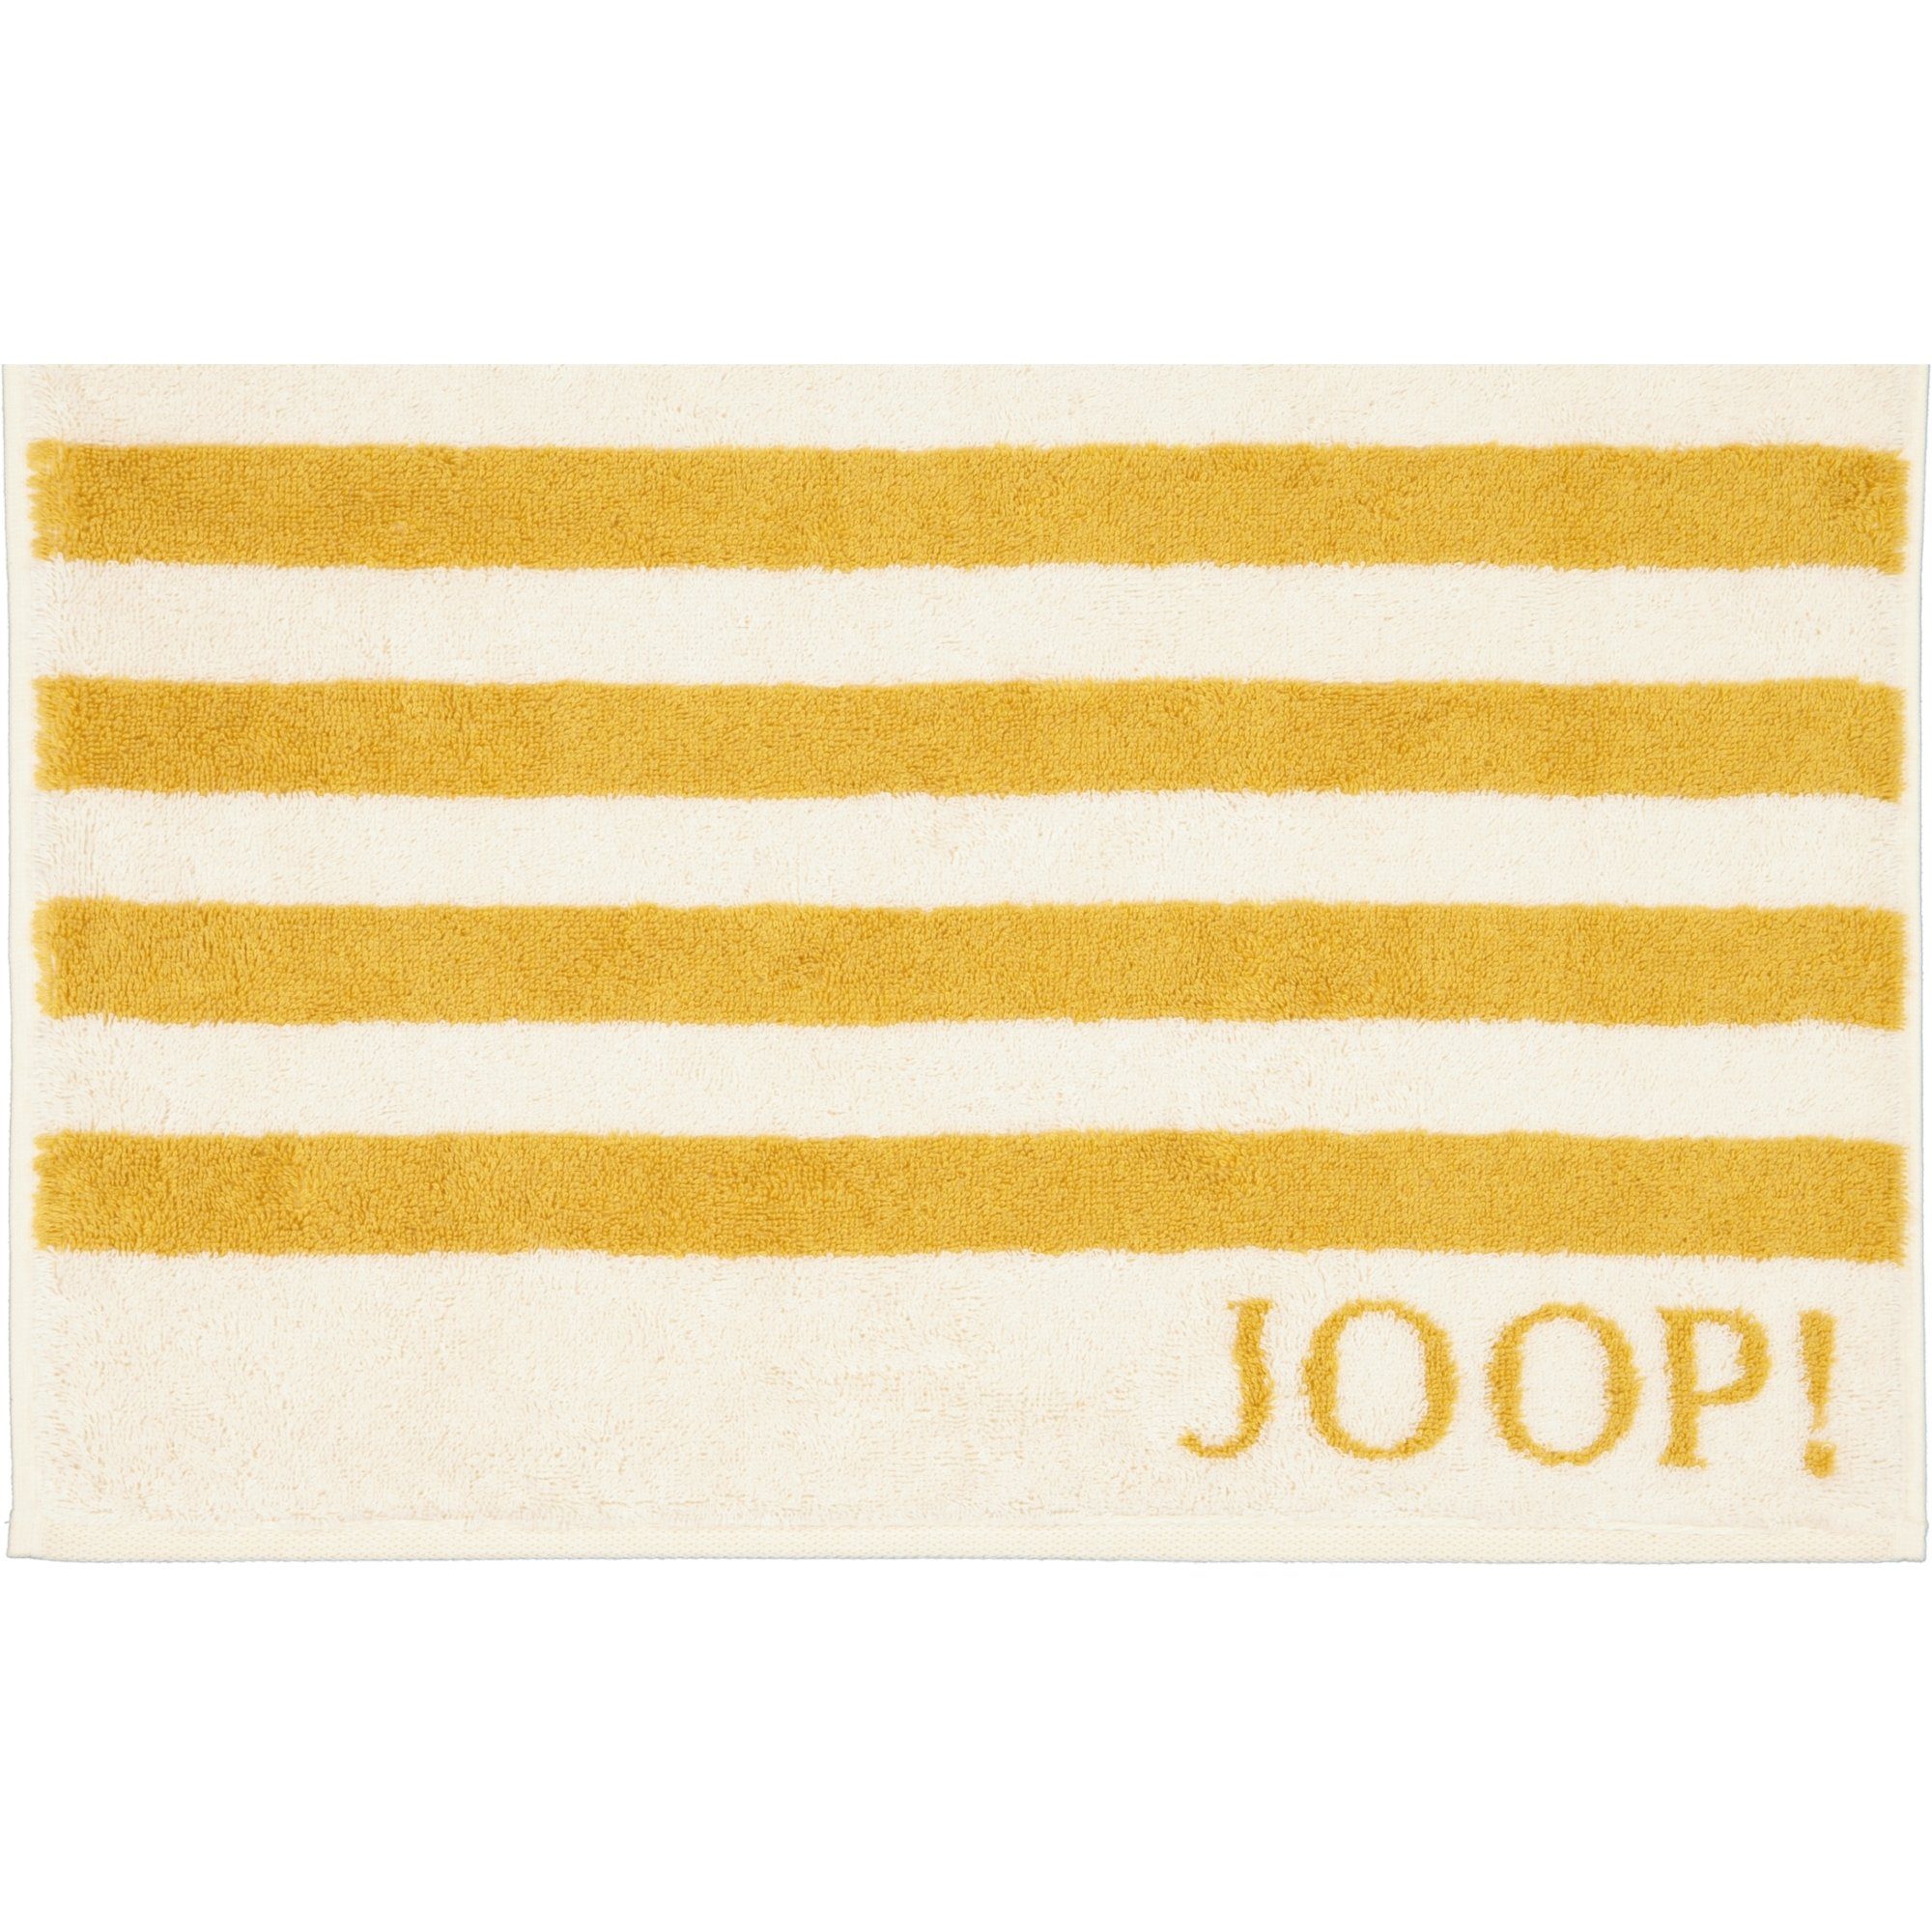 Stripes Ocker 100% Classic Handtücher 1610, Baumwolle Joop!